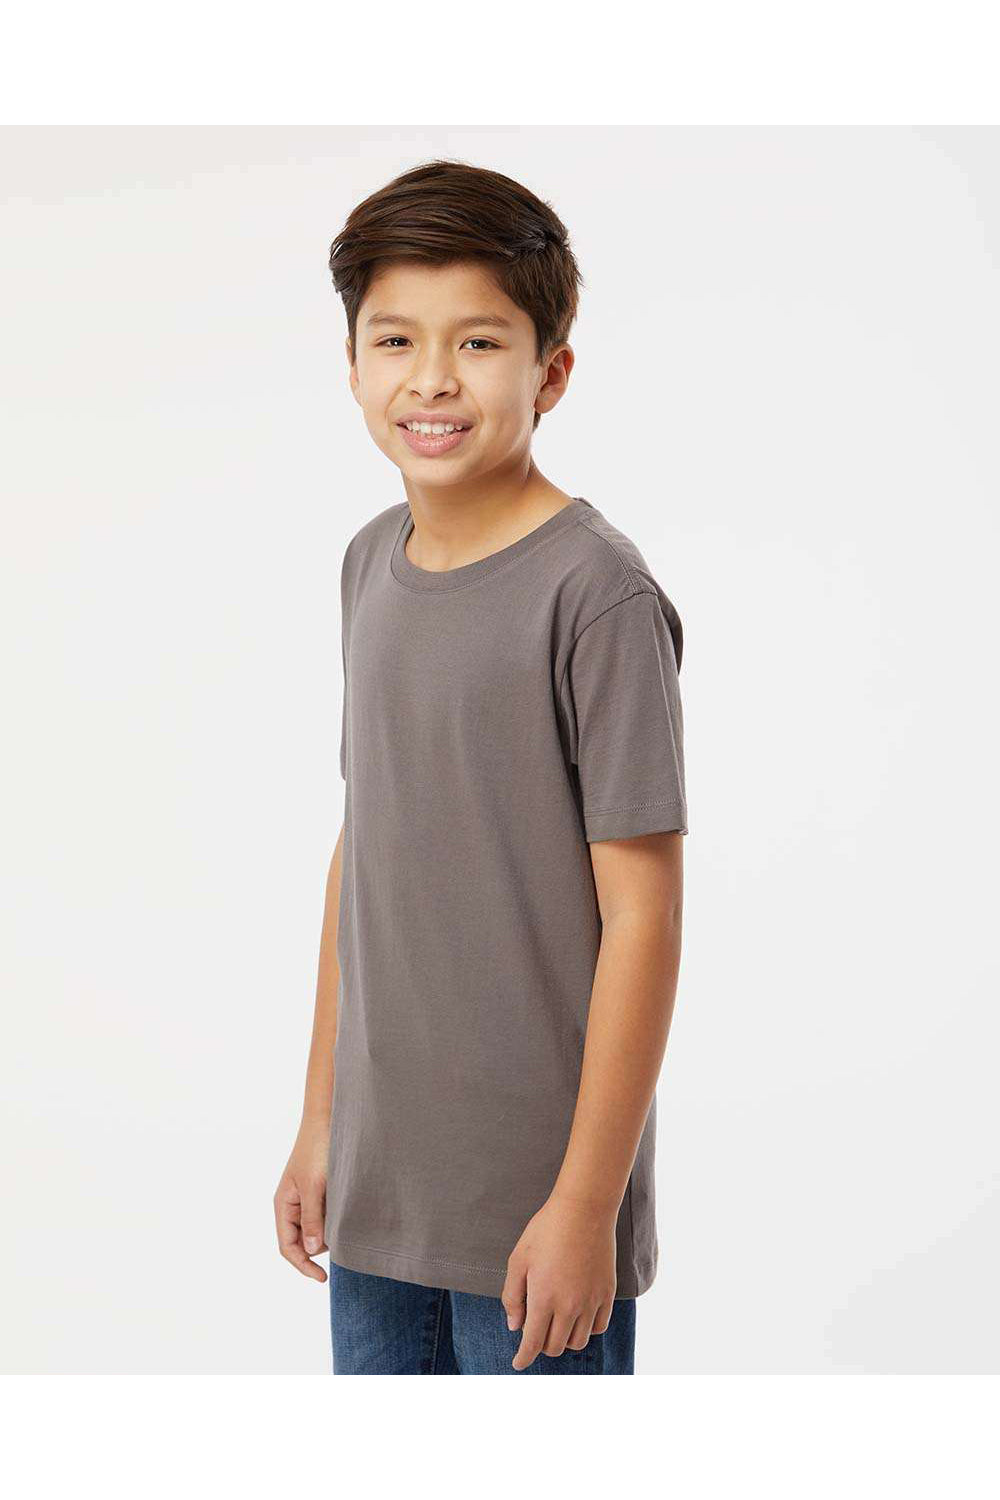 SoftShirts 402 Youth Organic Short Sleeve Crewneck T-Shirt Graphite Grey Model Side